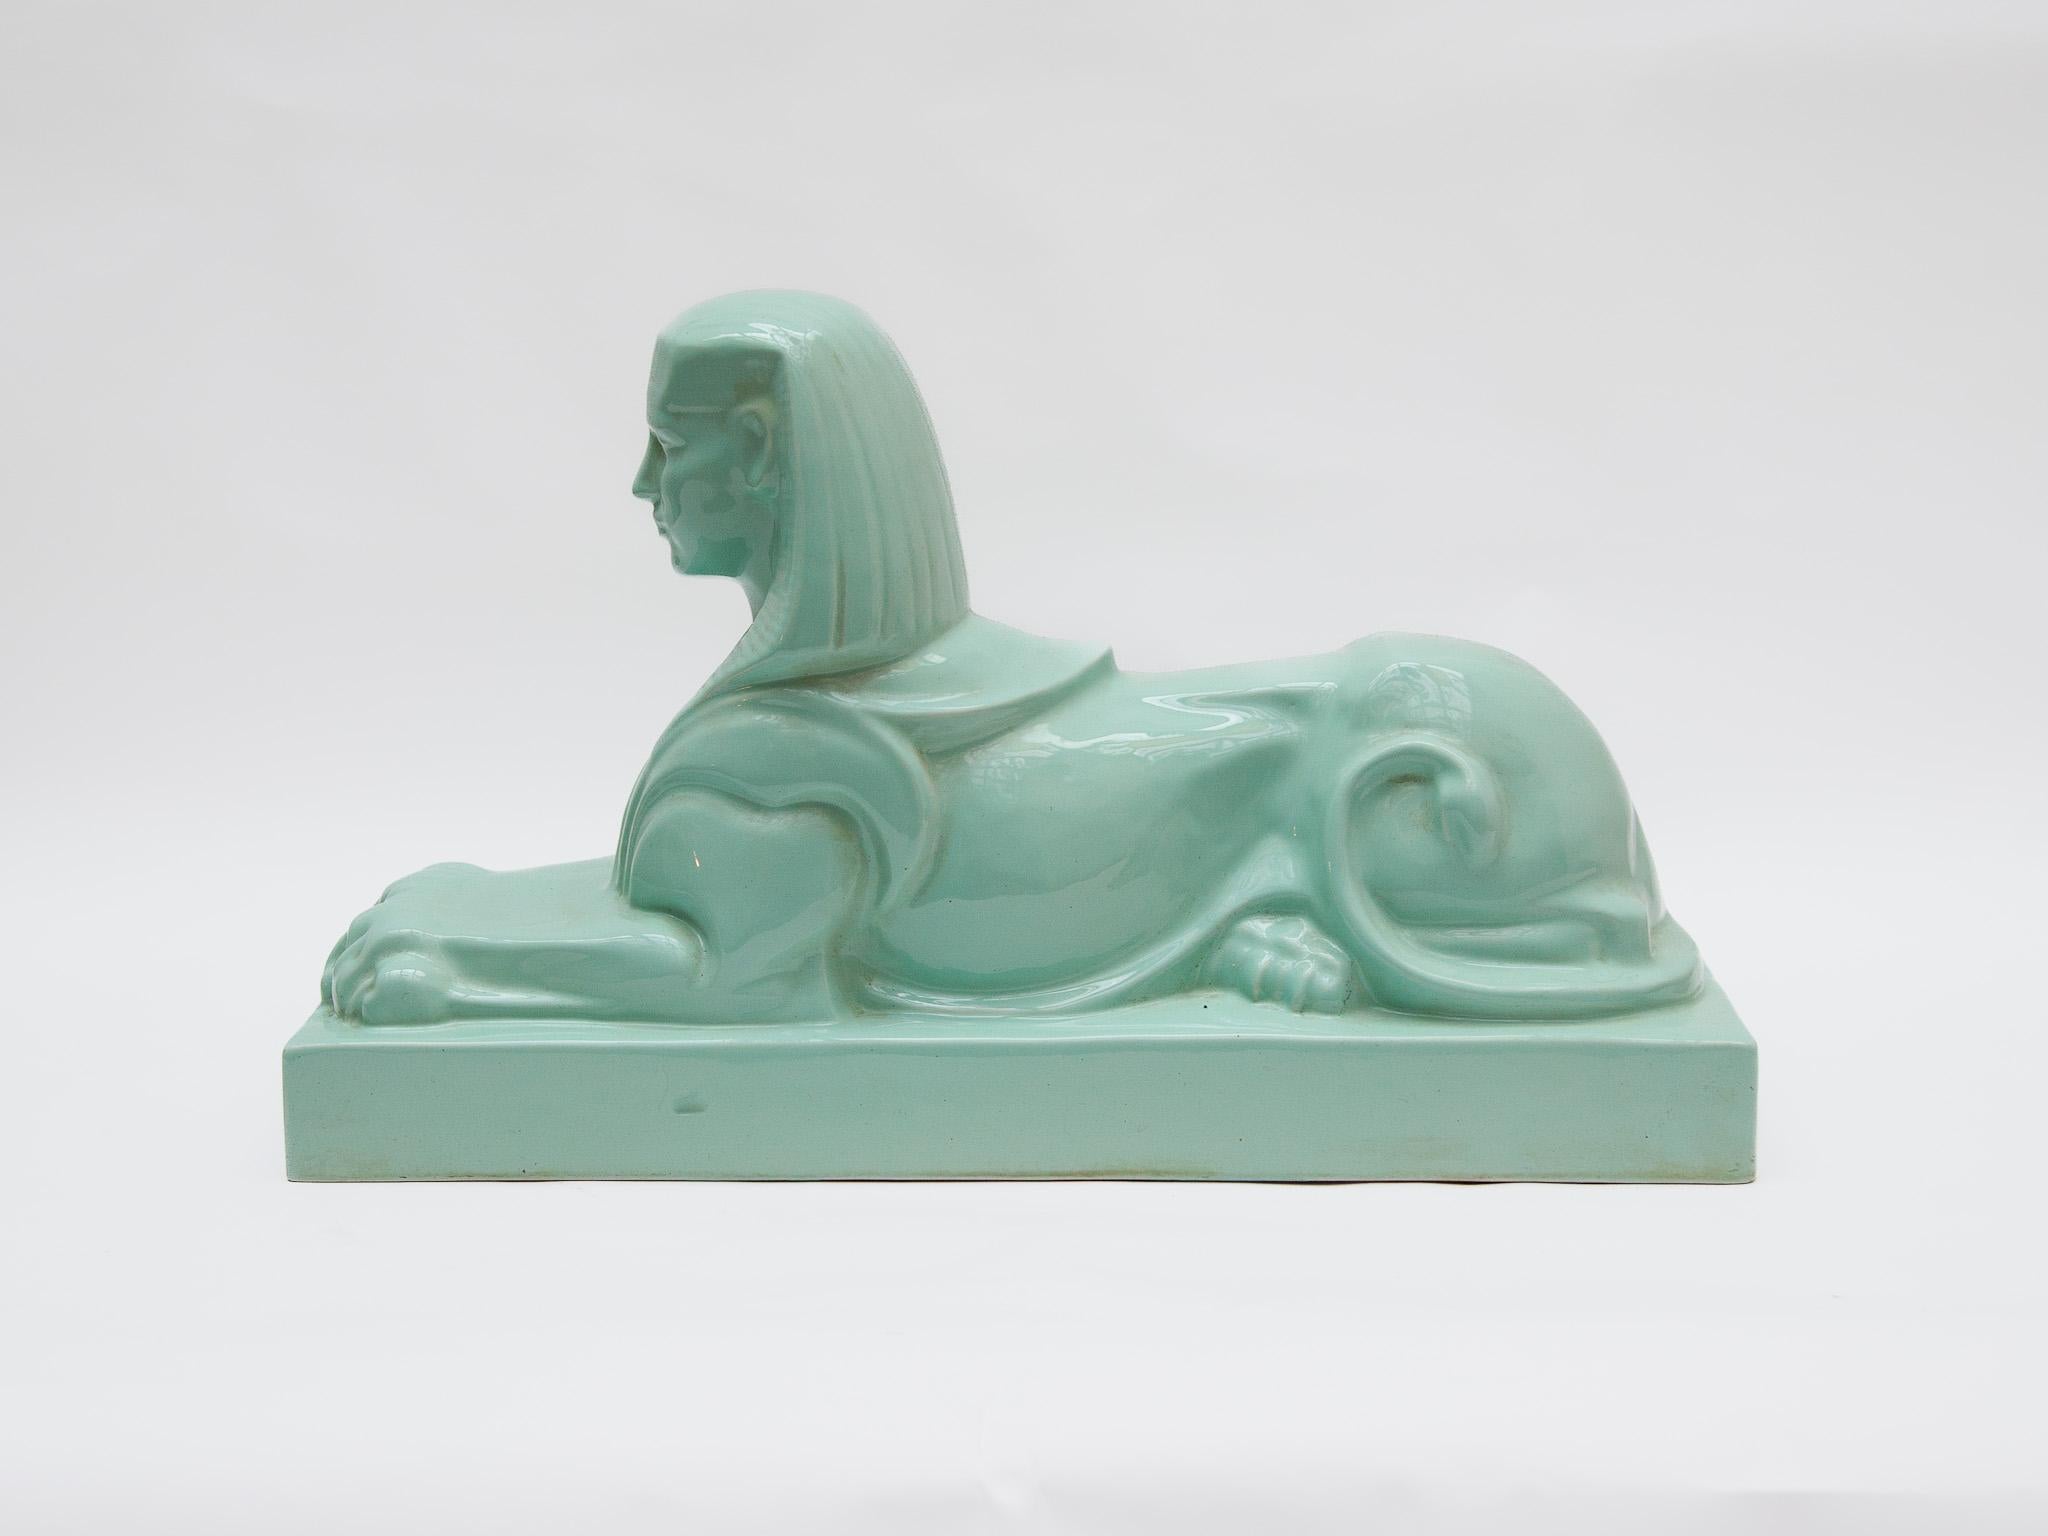 Ceramic Sphinx Designed by Vos for Royal Sphinx Maastricht/ Petrus Regout 1